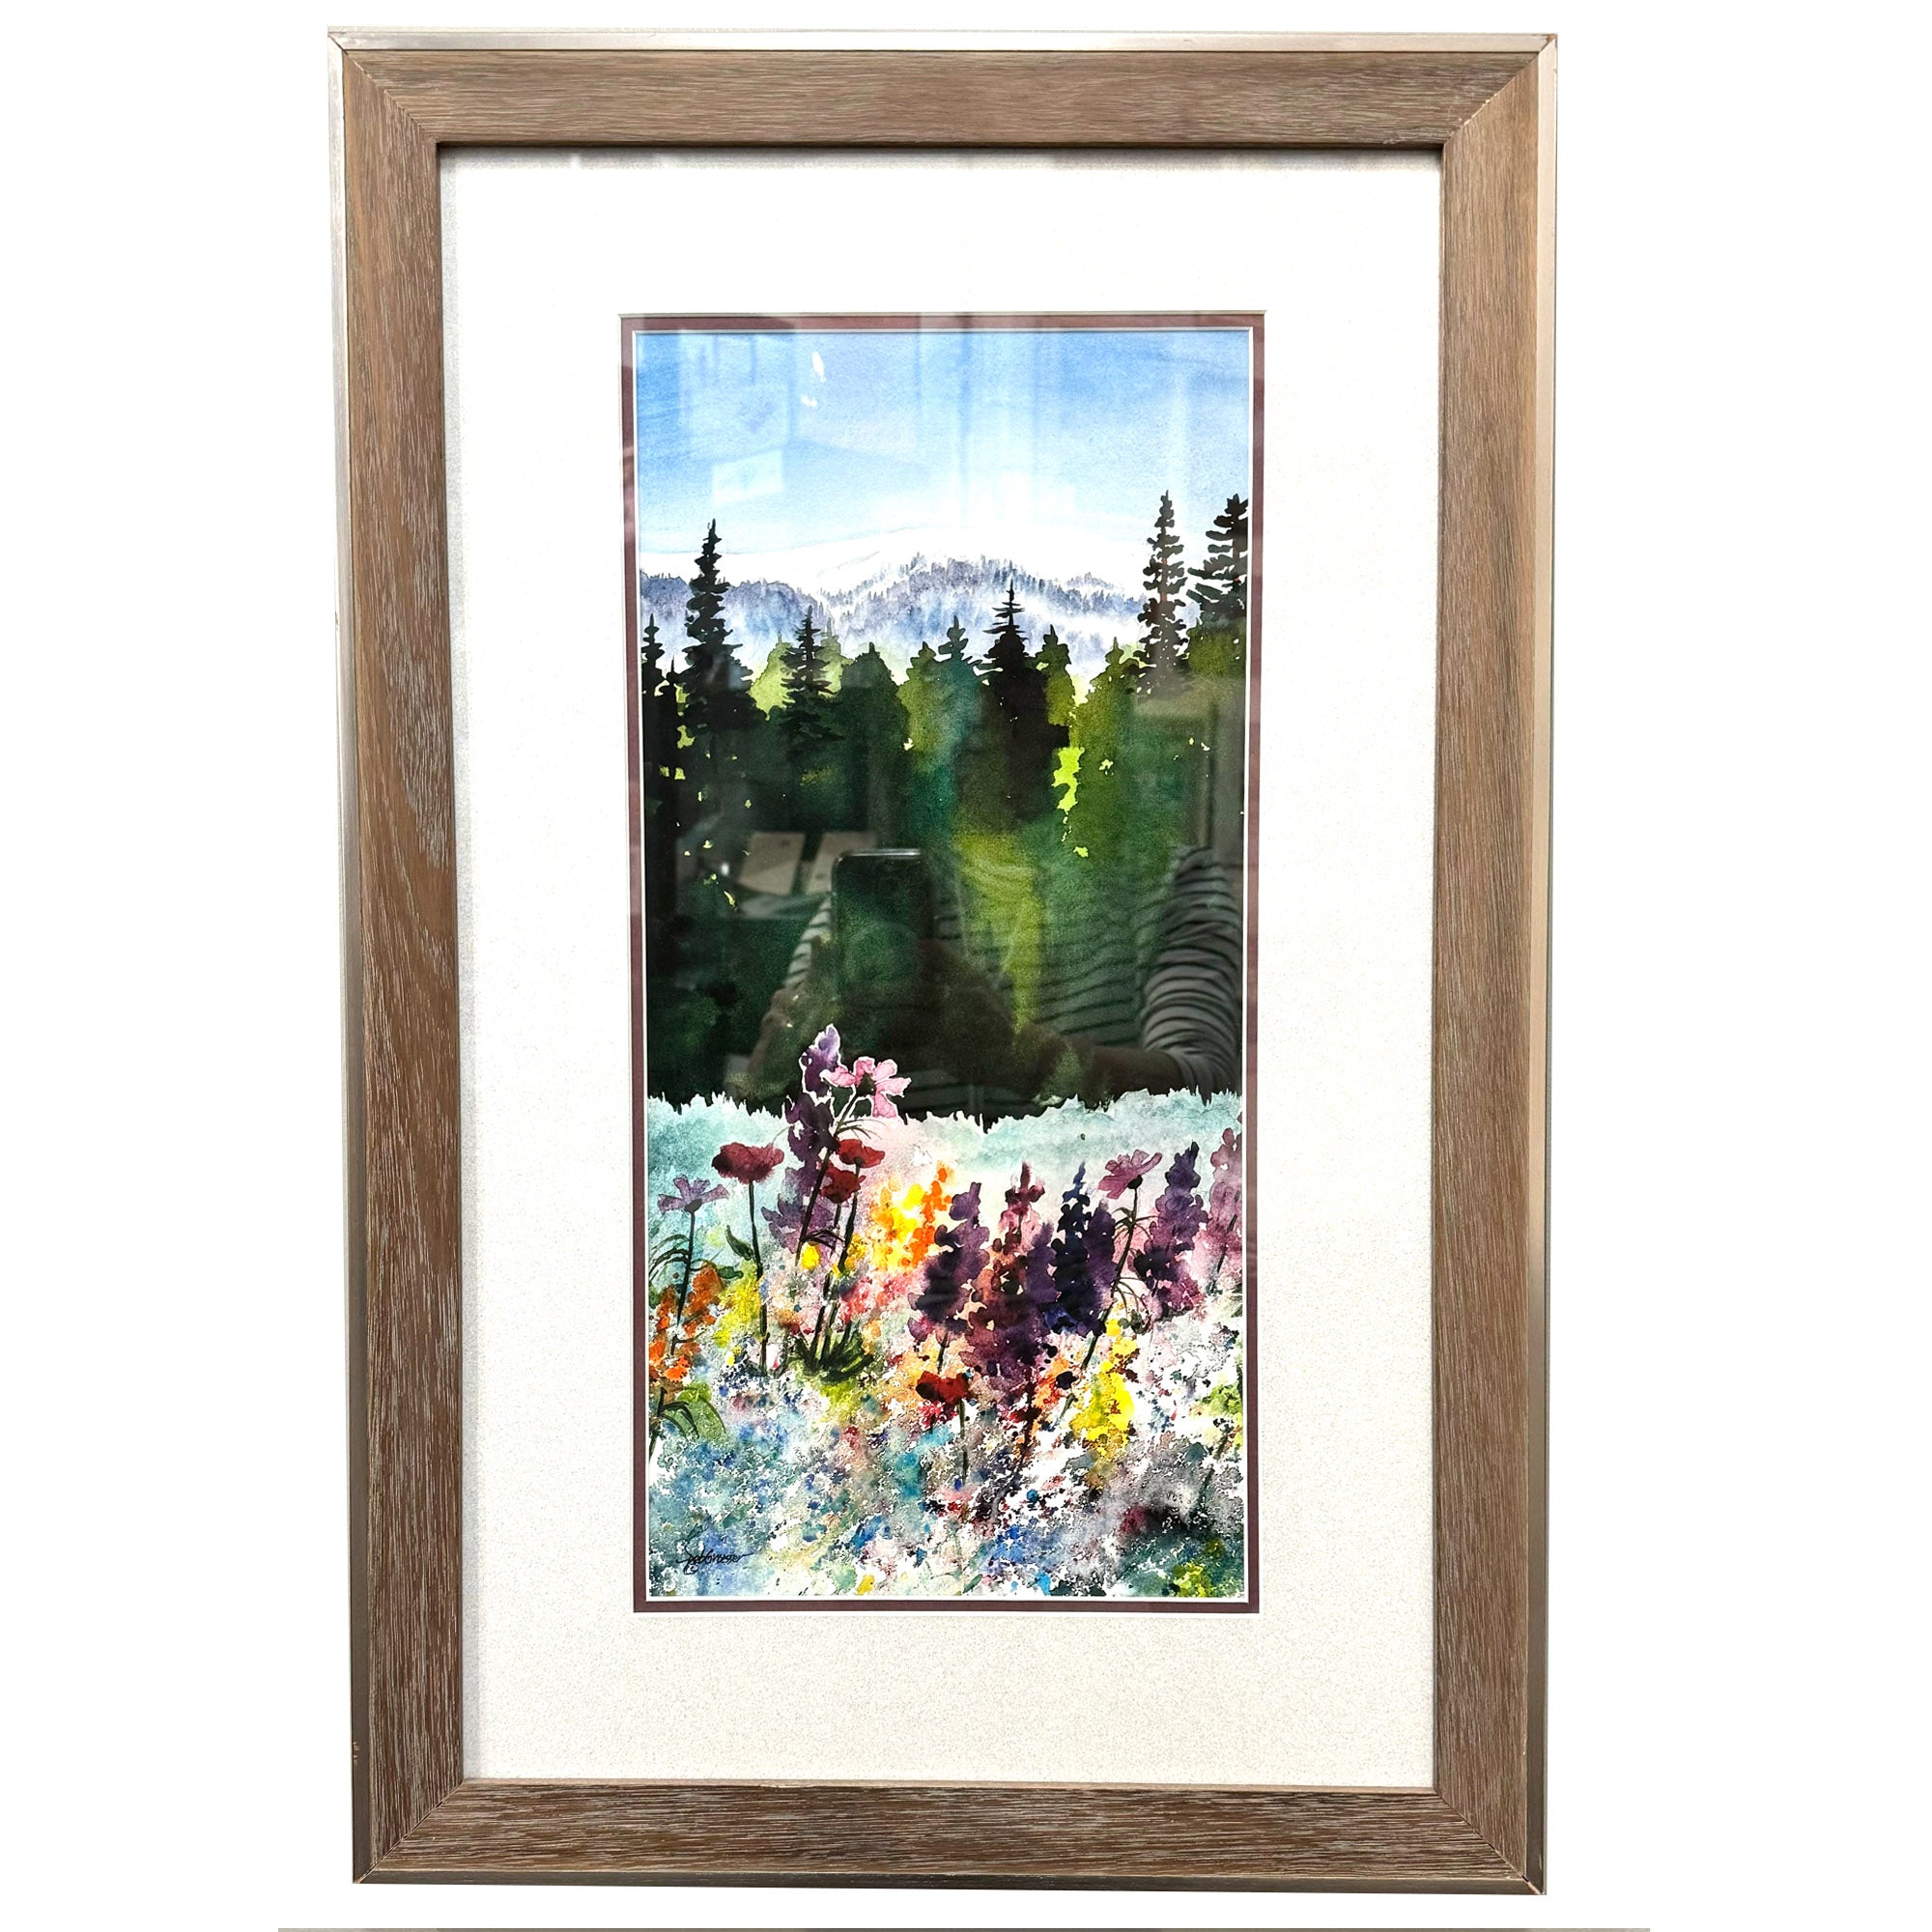 A Slice of Heaven: Wildflowers (framed)